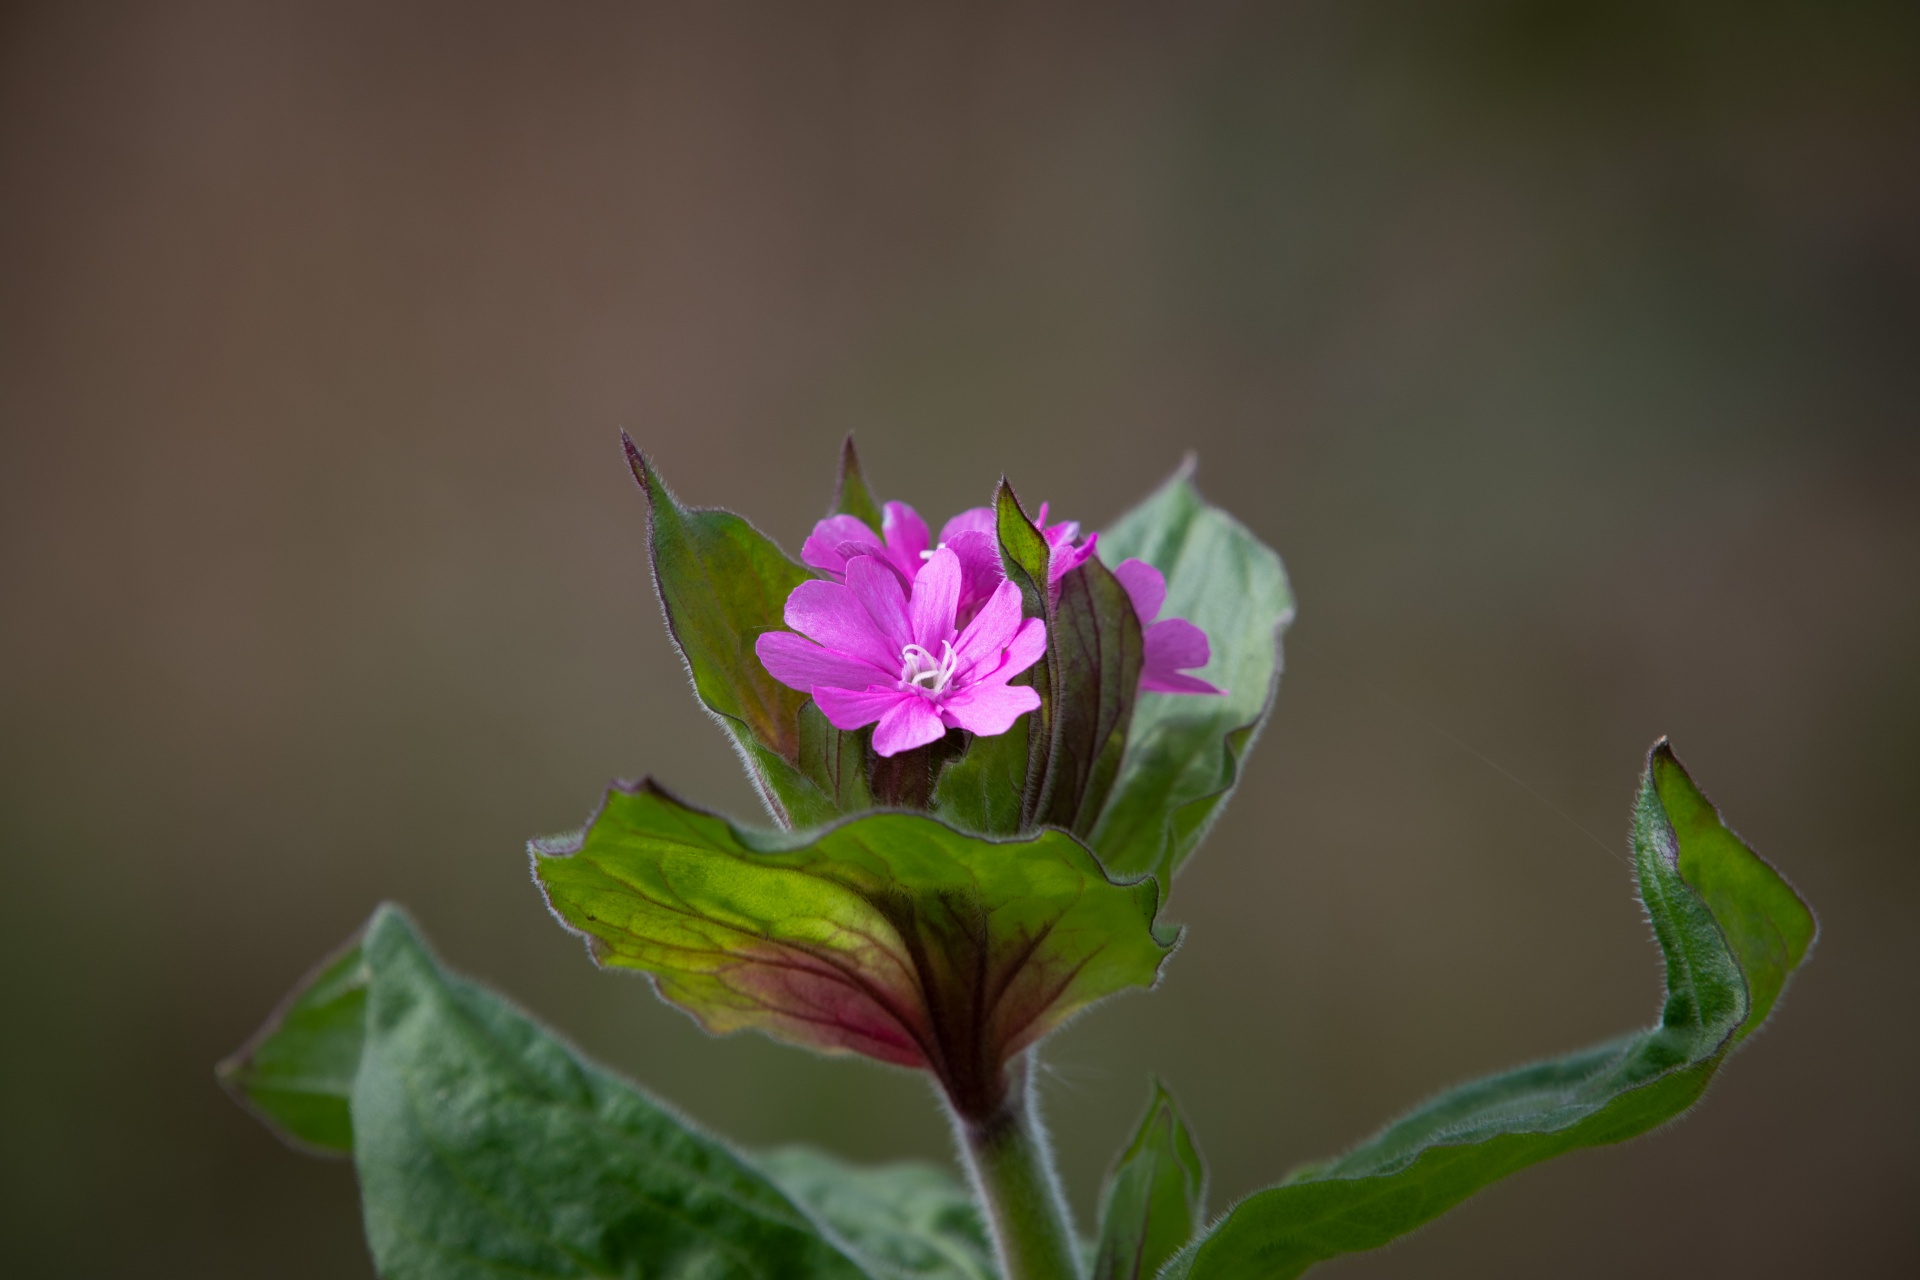 Purple Flower, Silene Dioica